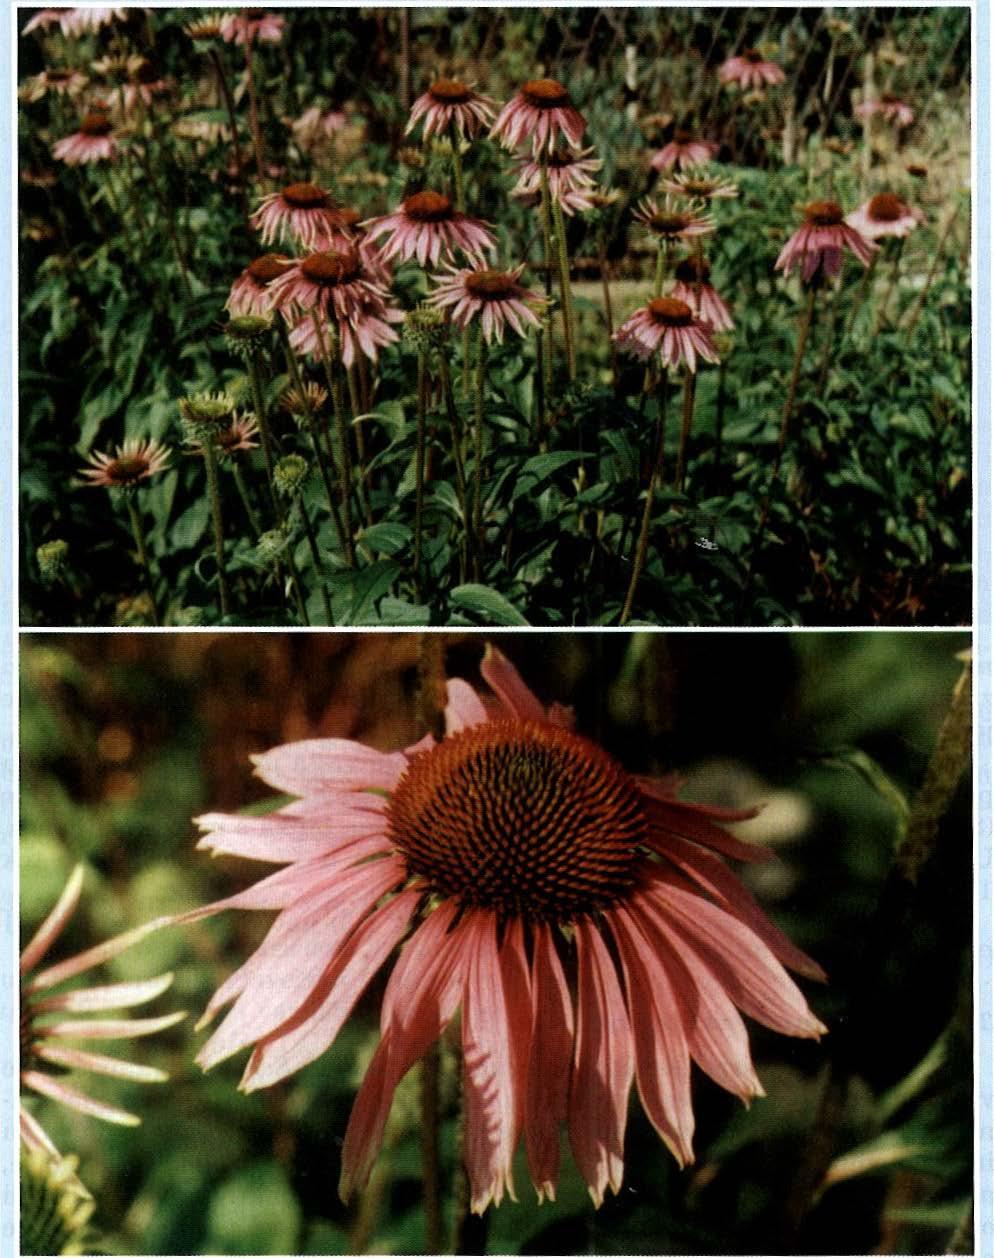 I. Kosalec, M. Bakmaz I D. Brkić: Bioaktivne sastavnice grimizne rudbekije (Echinacea purpurea (L.) Moench, Asteraceae), Farm. Glas. 59, 11/2003 Slika 2 i 3.